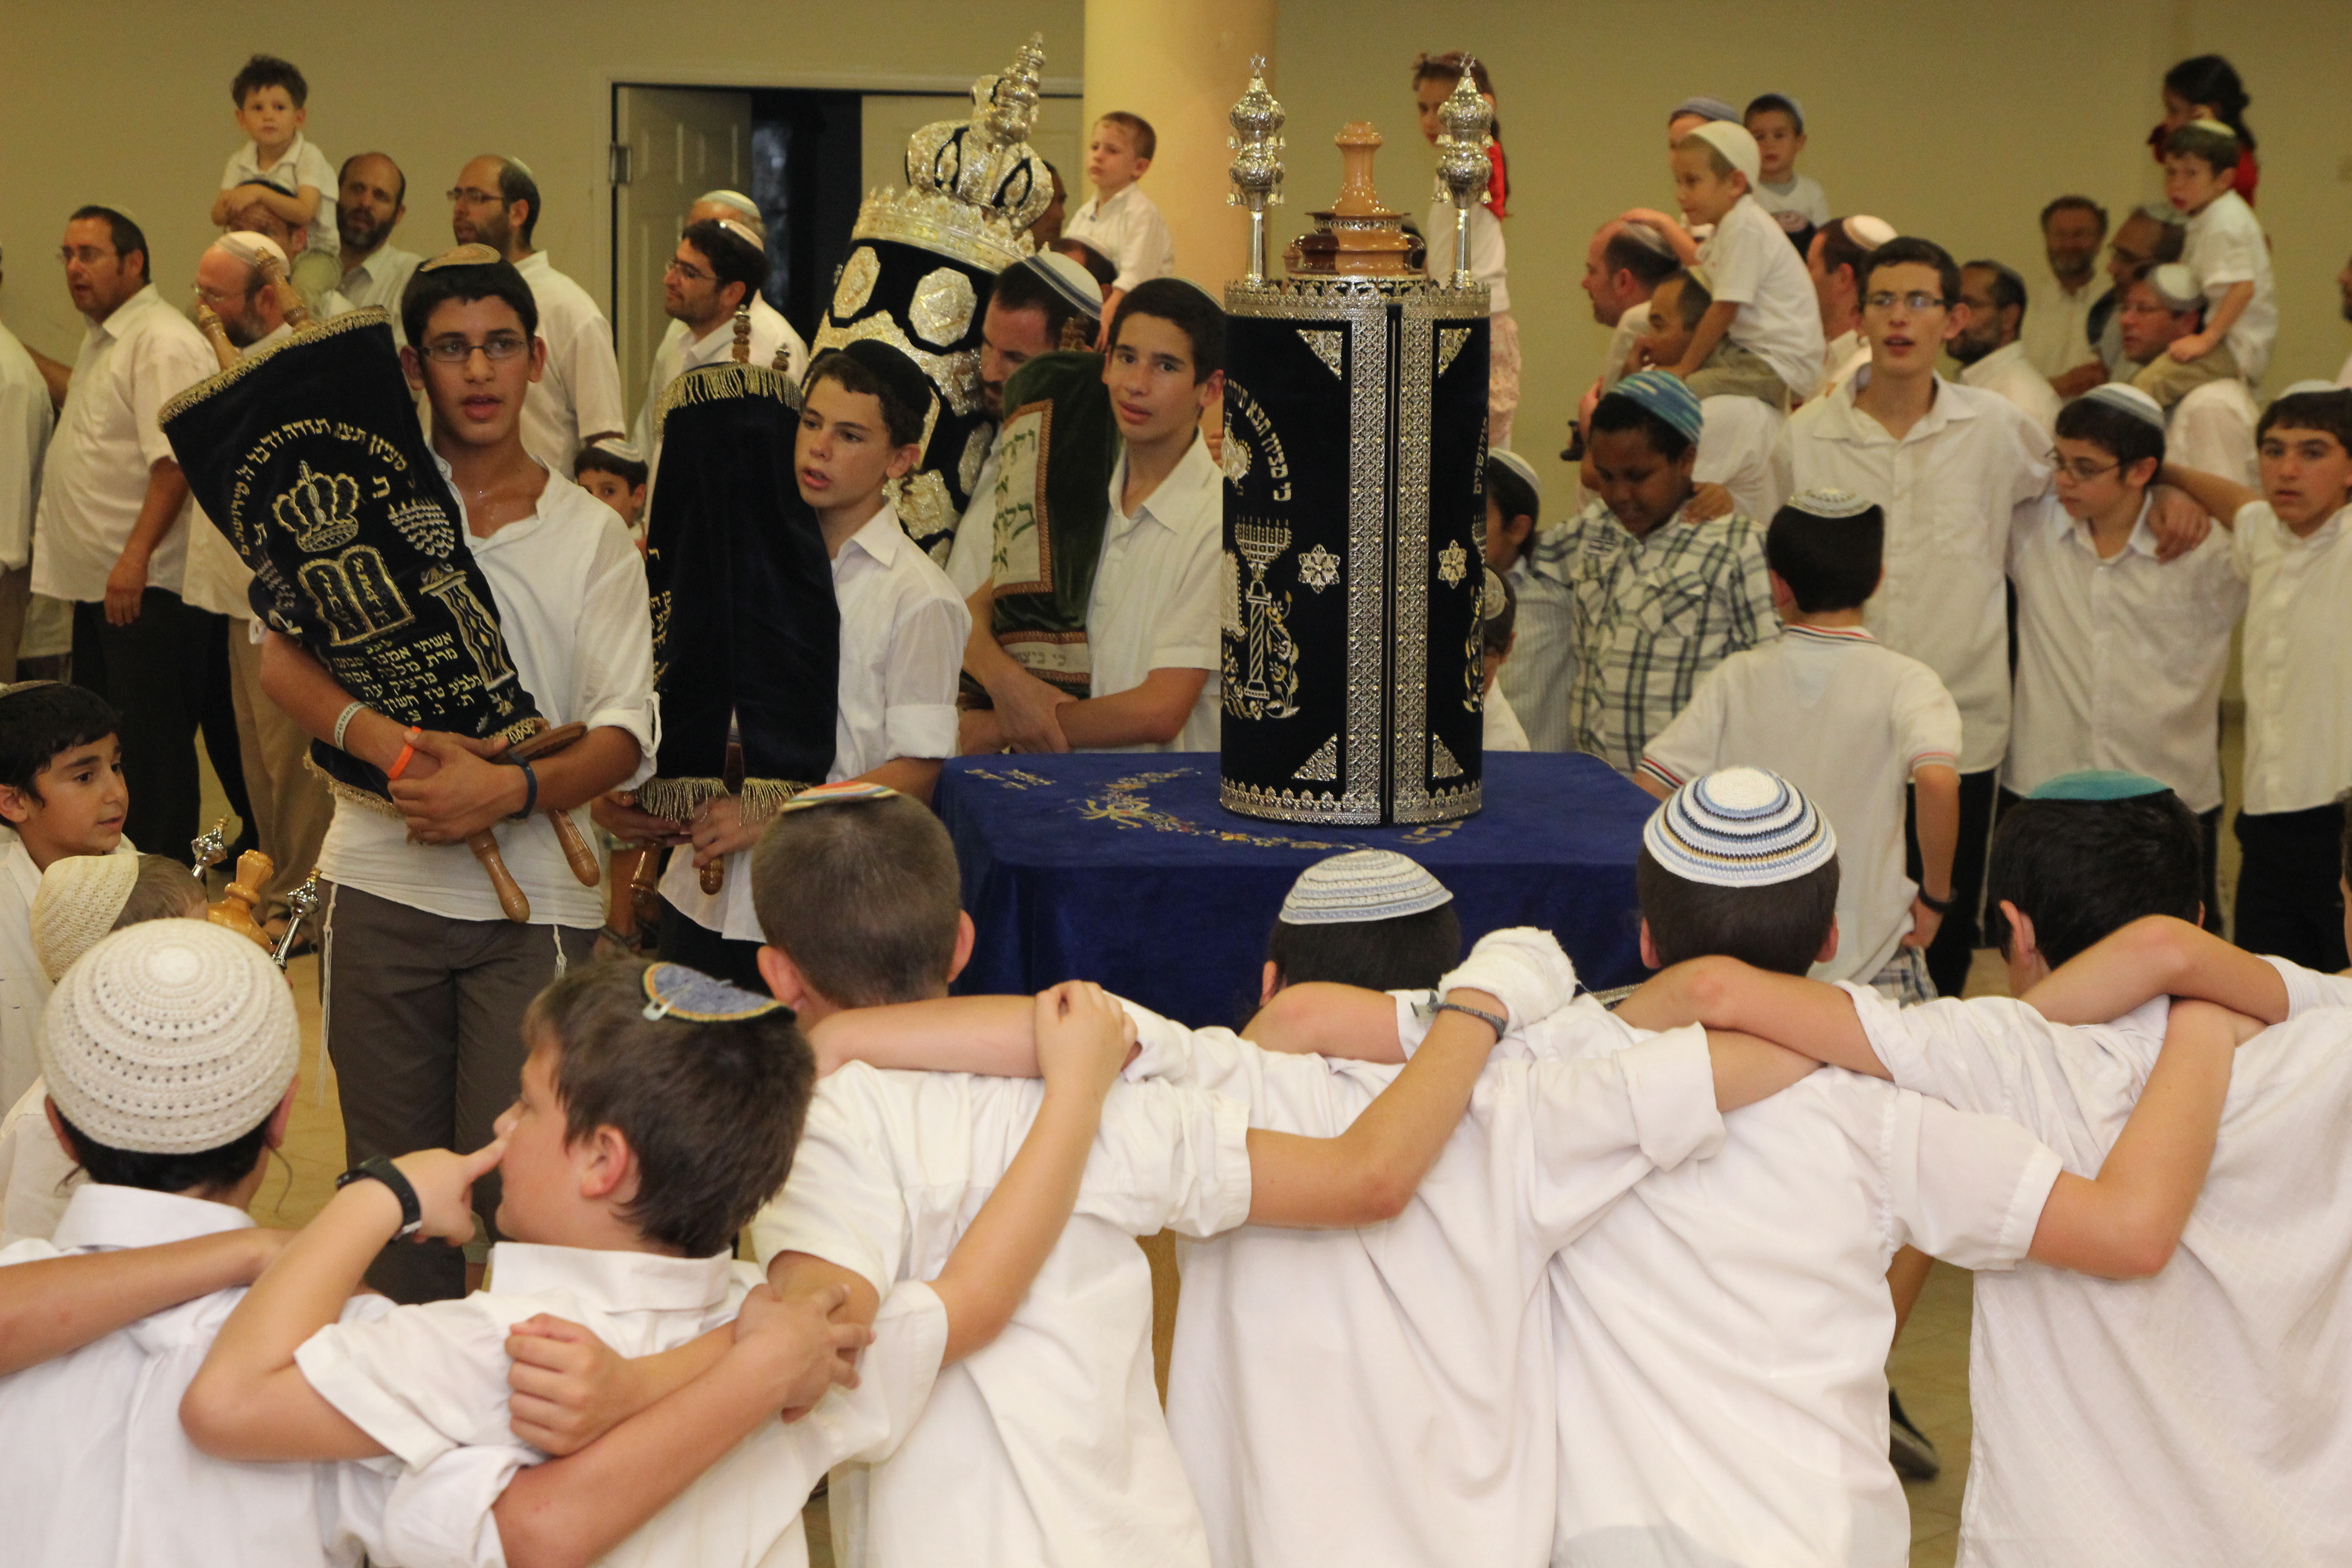 Simchat Torah: Rejoicing With the Torah